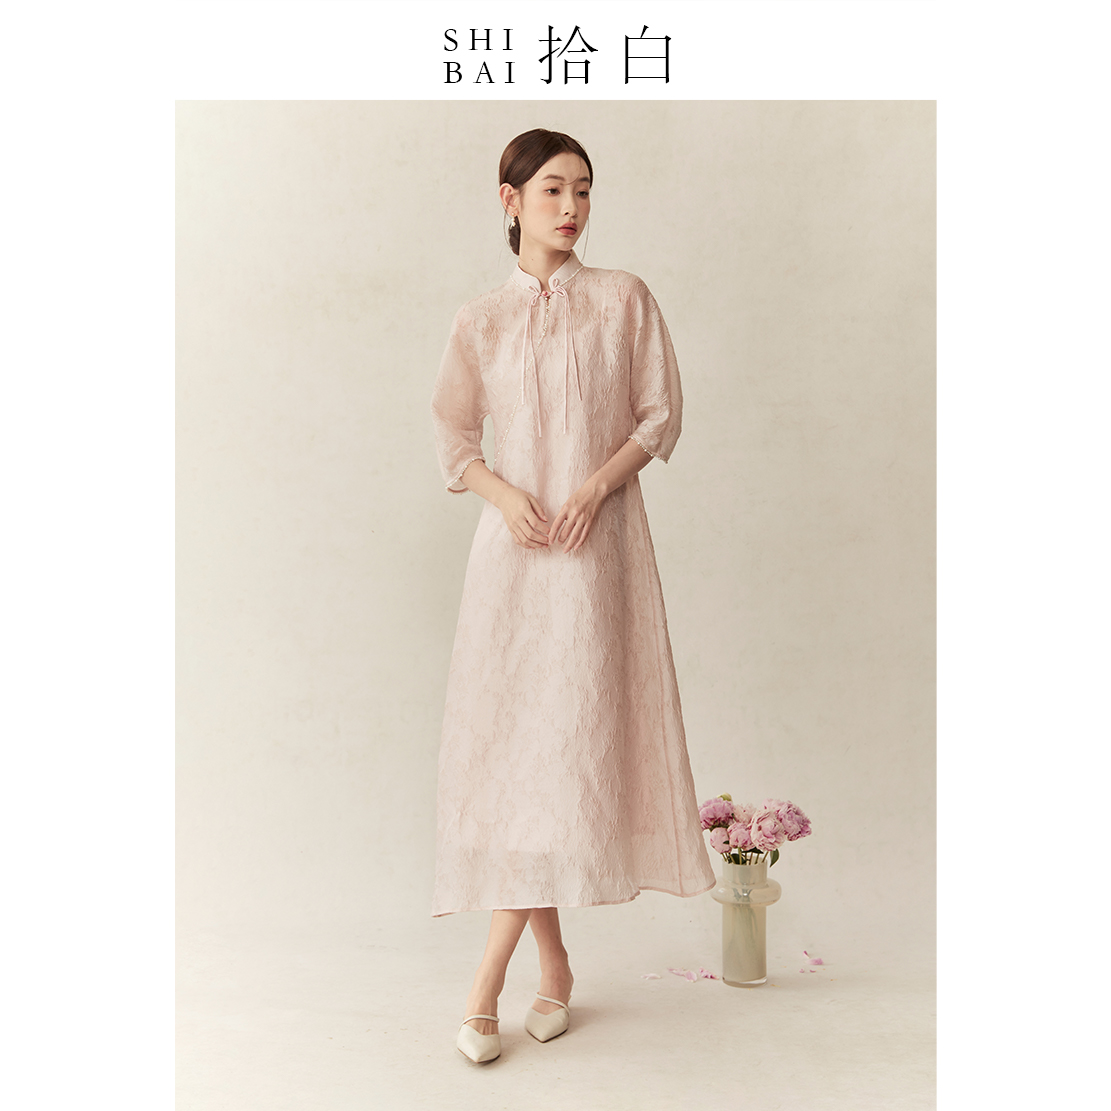 SHIBAI拾白新中式连衣裙女提花纱镶珍珠边改良旗袍日常年轻款粉色 - 图2